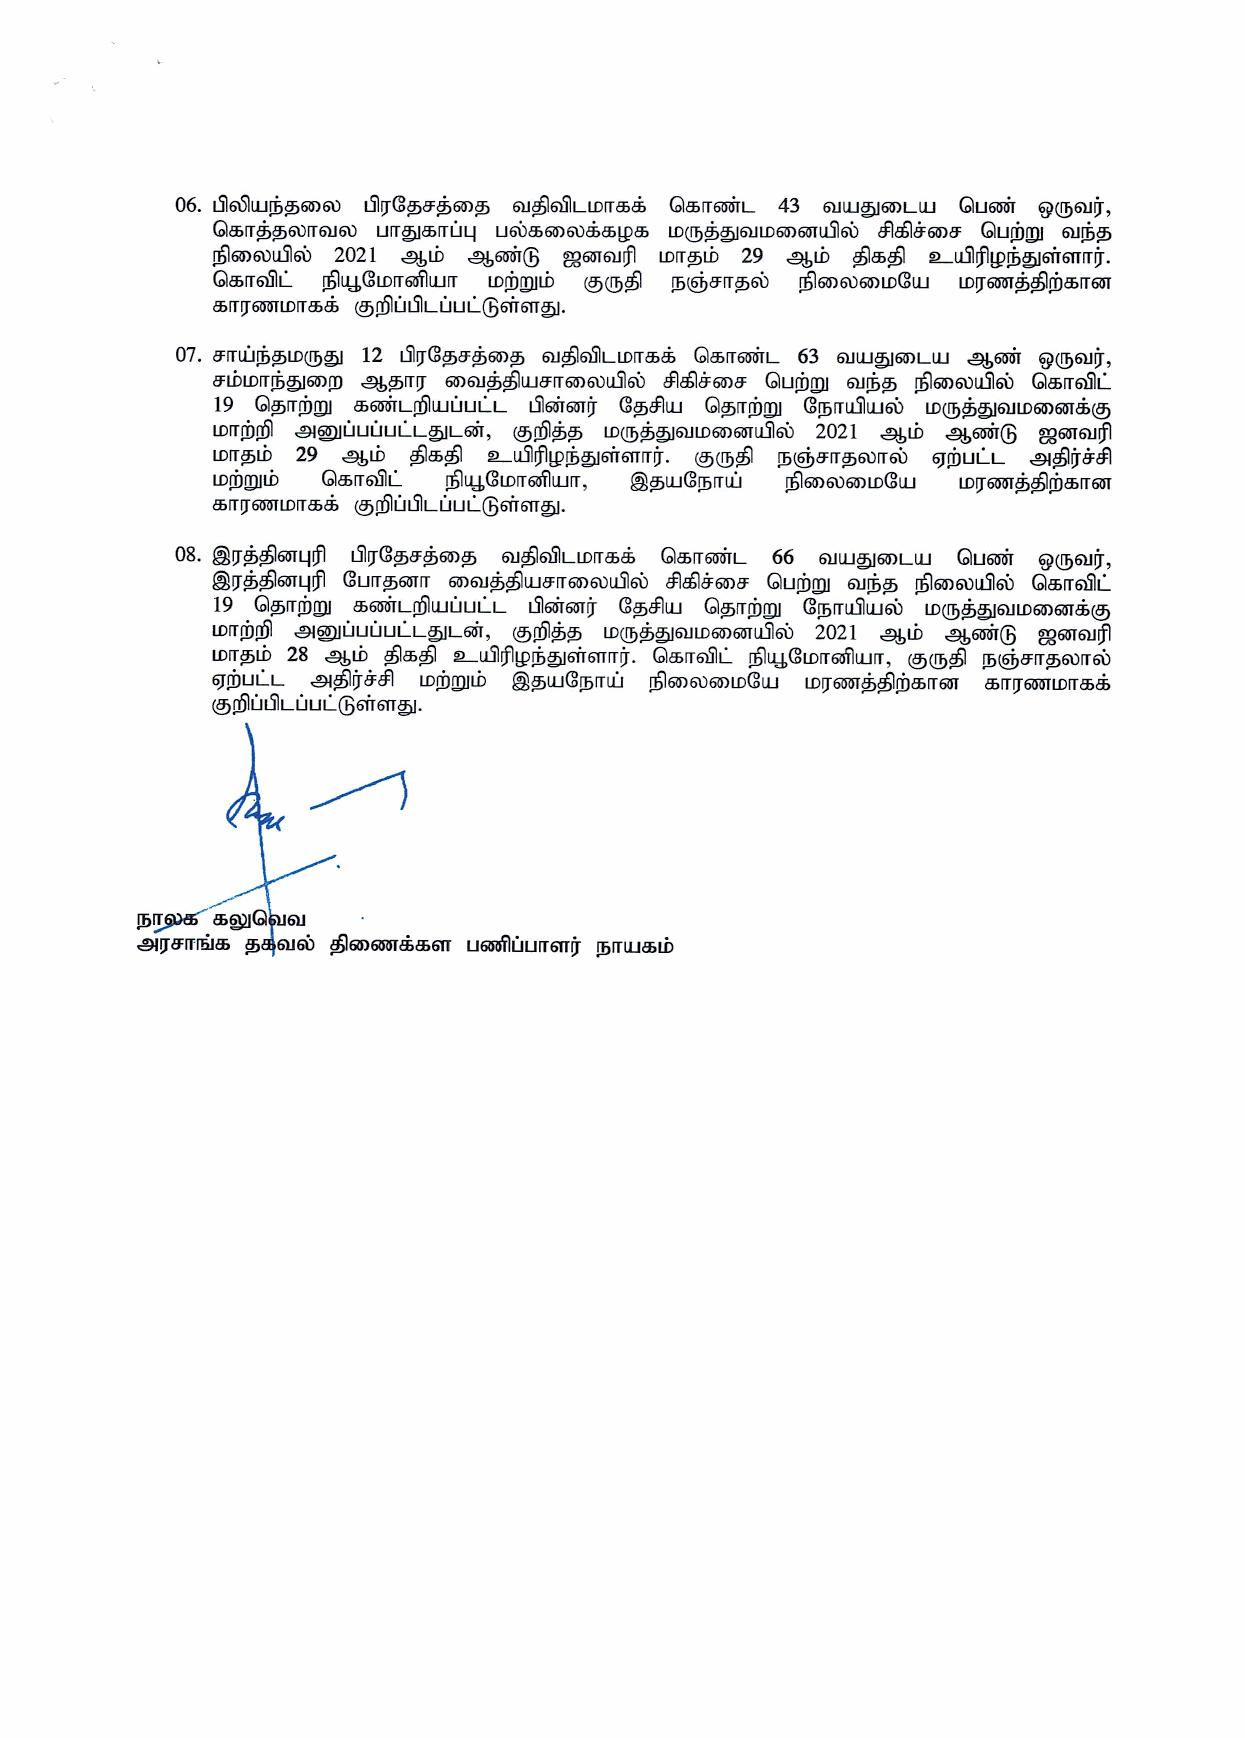 Media Release No 110 Tamil page 002